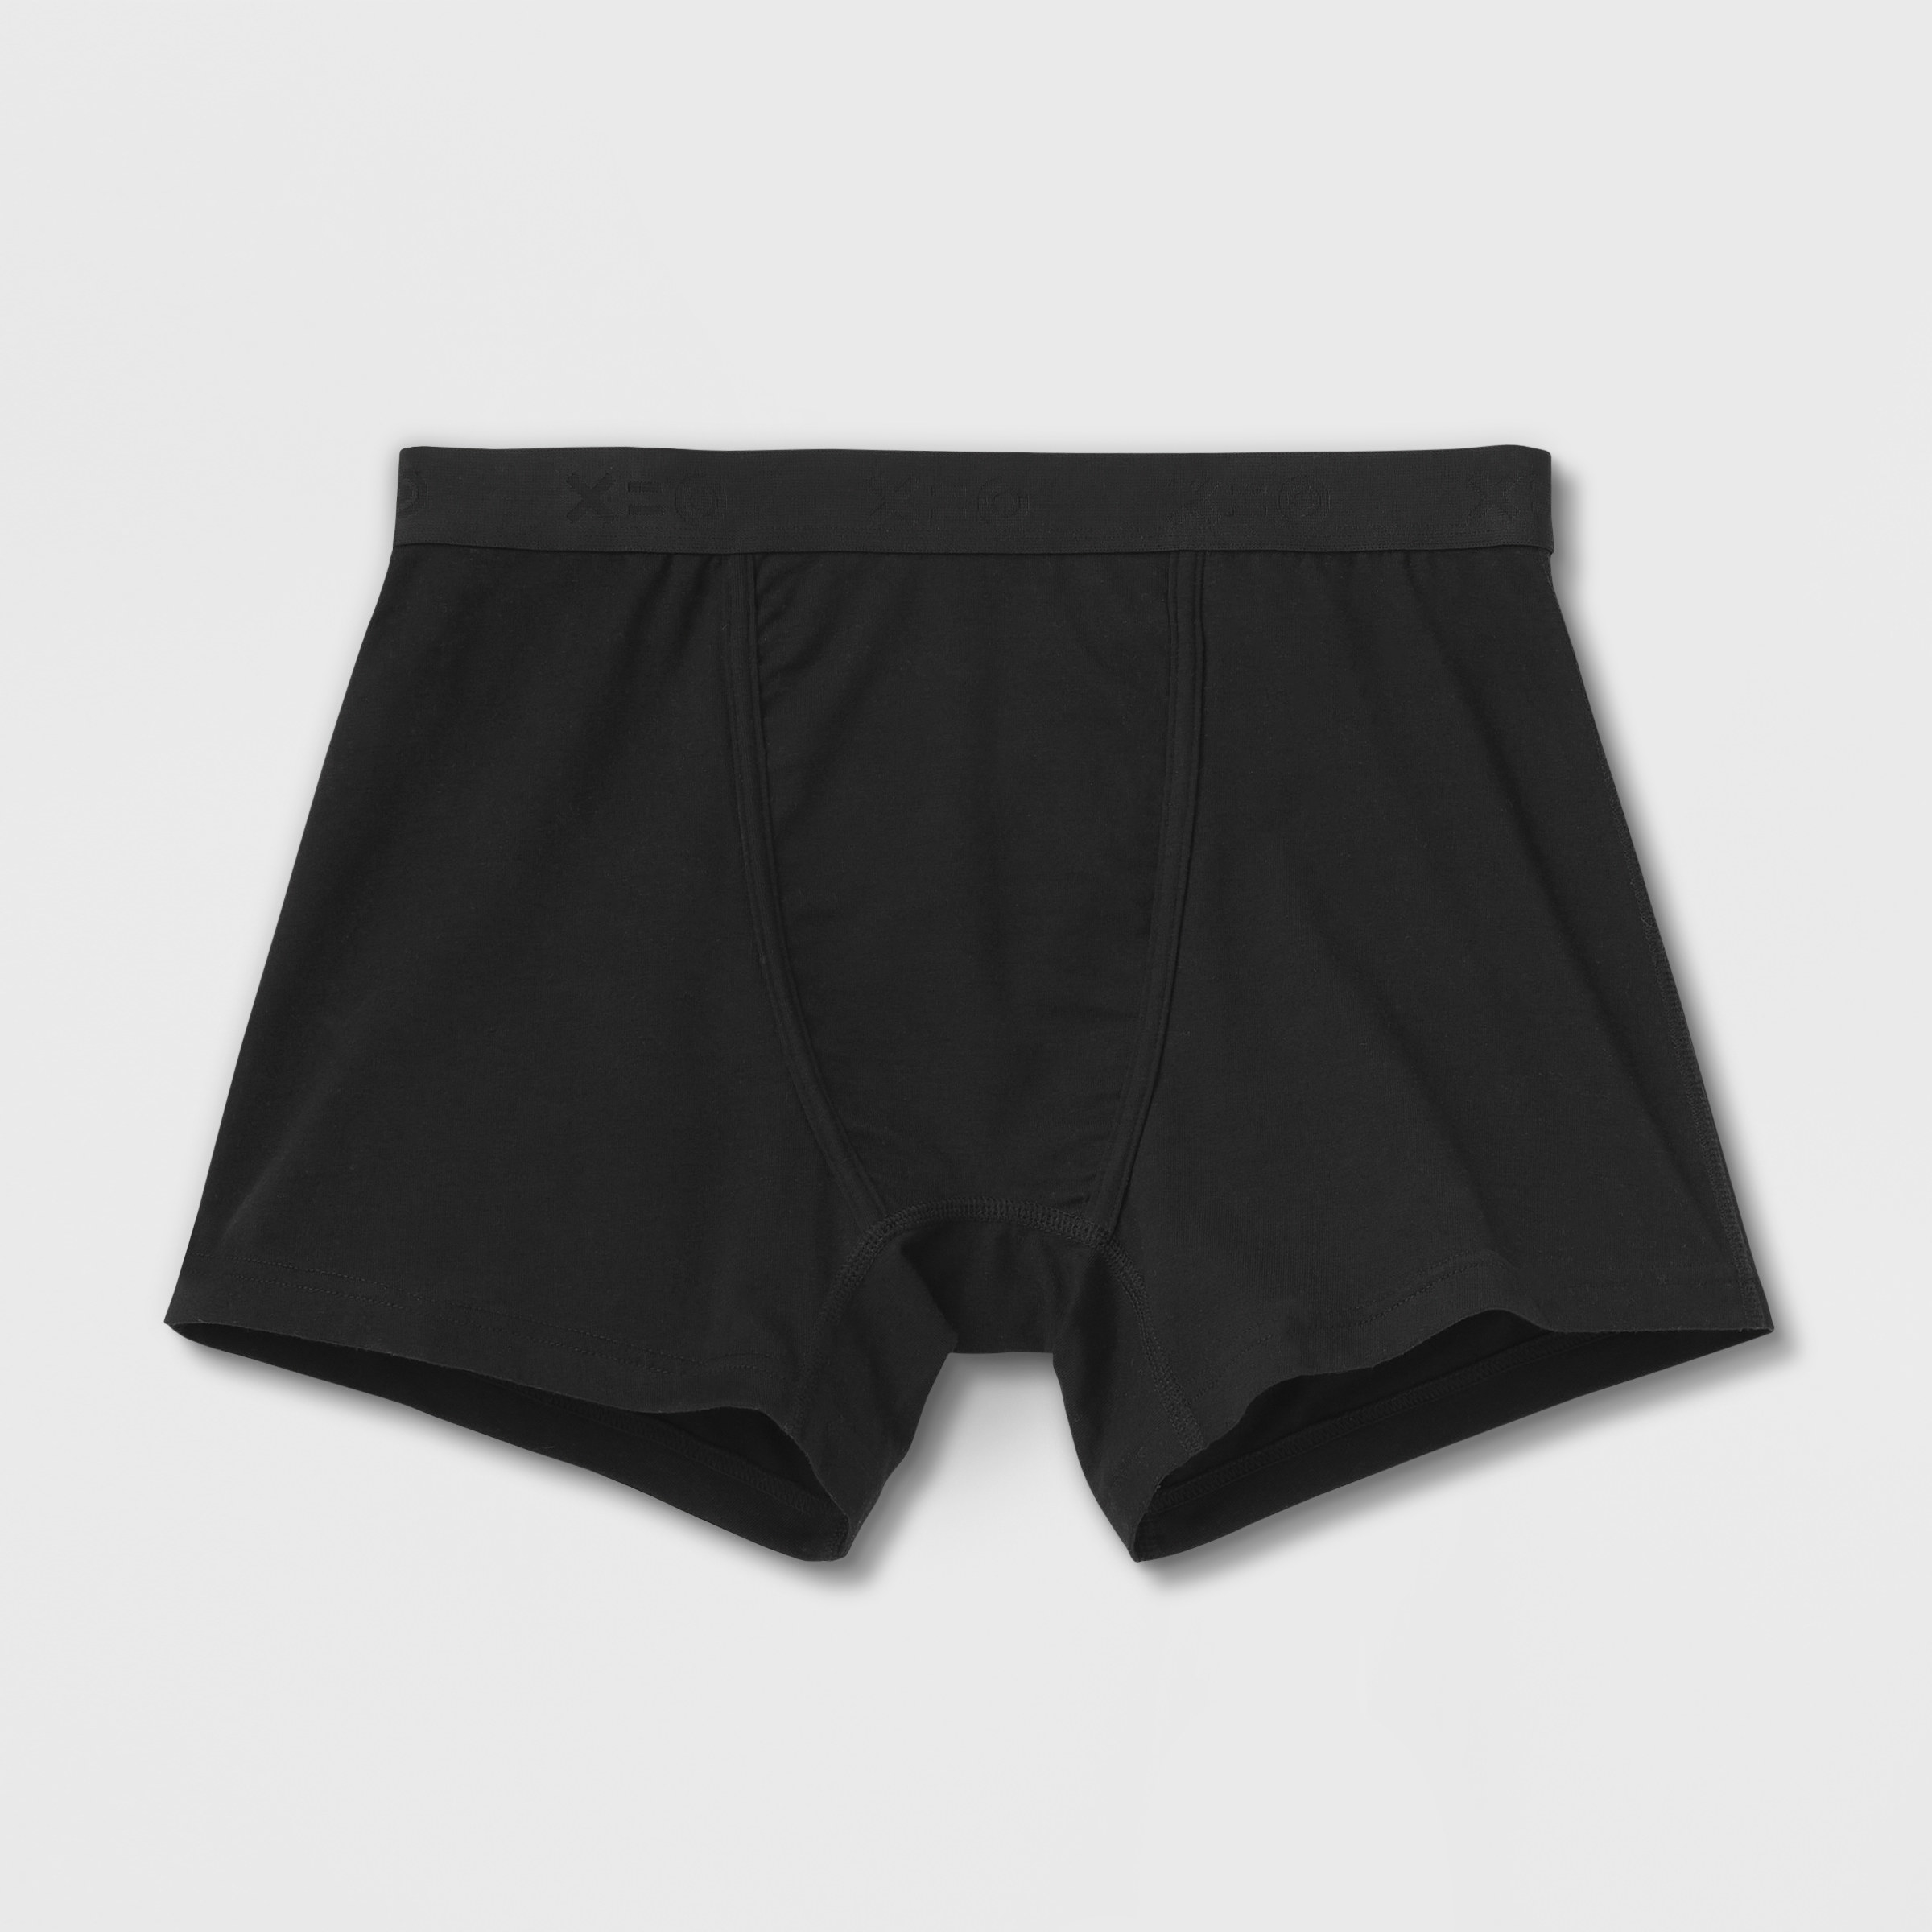 Black TomboyX Packing Underwear